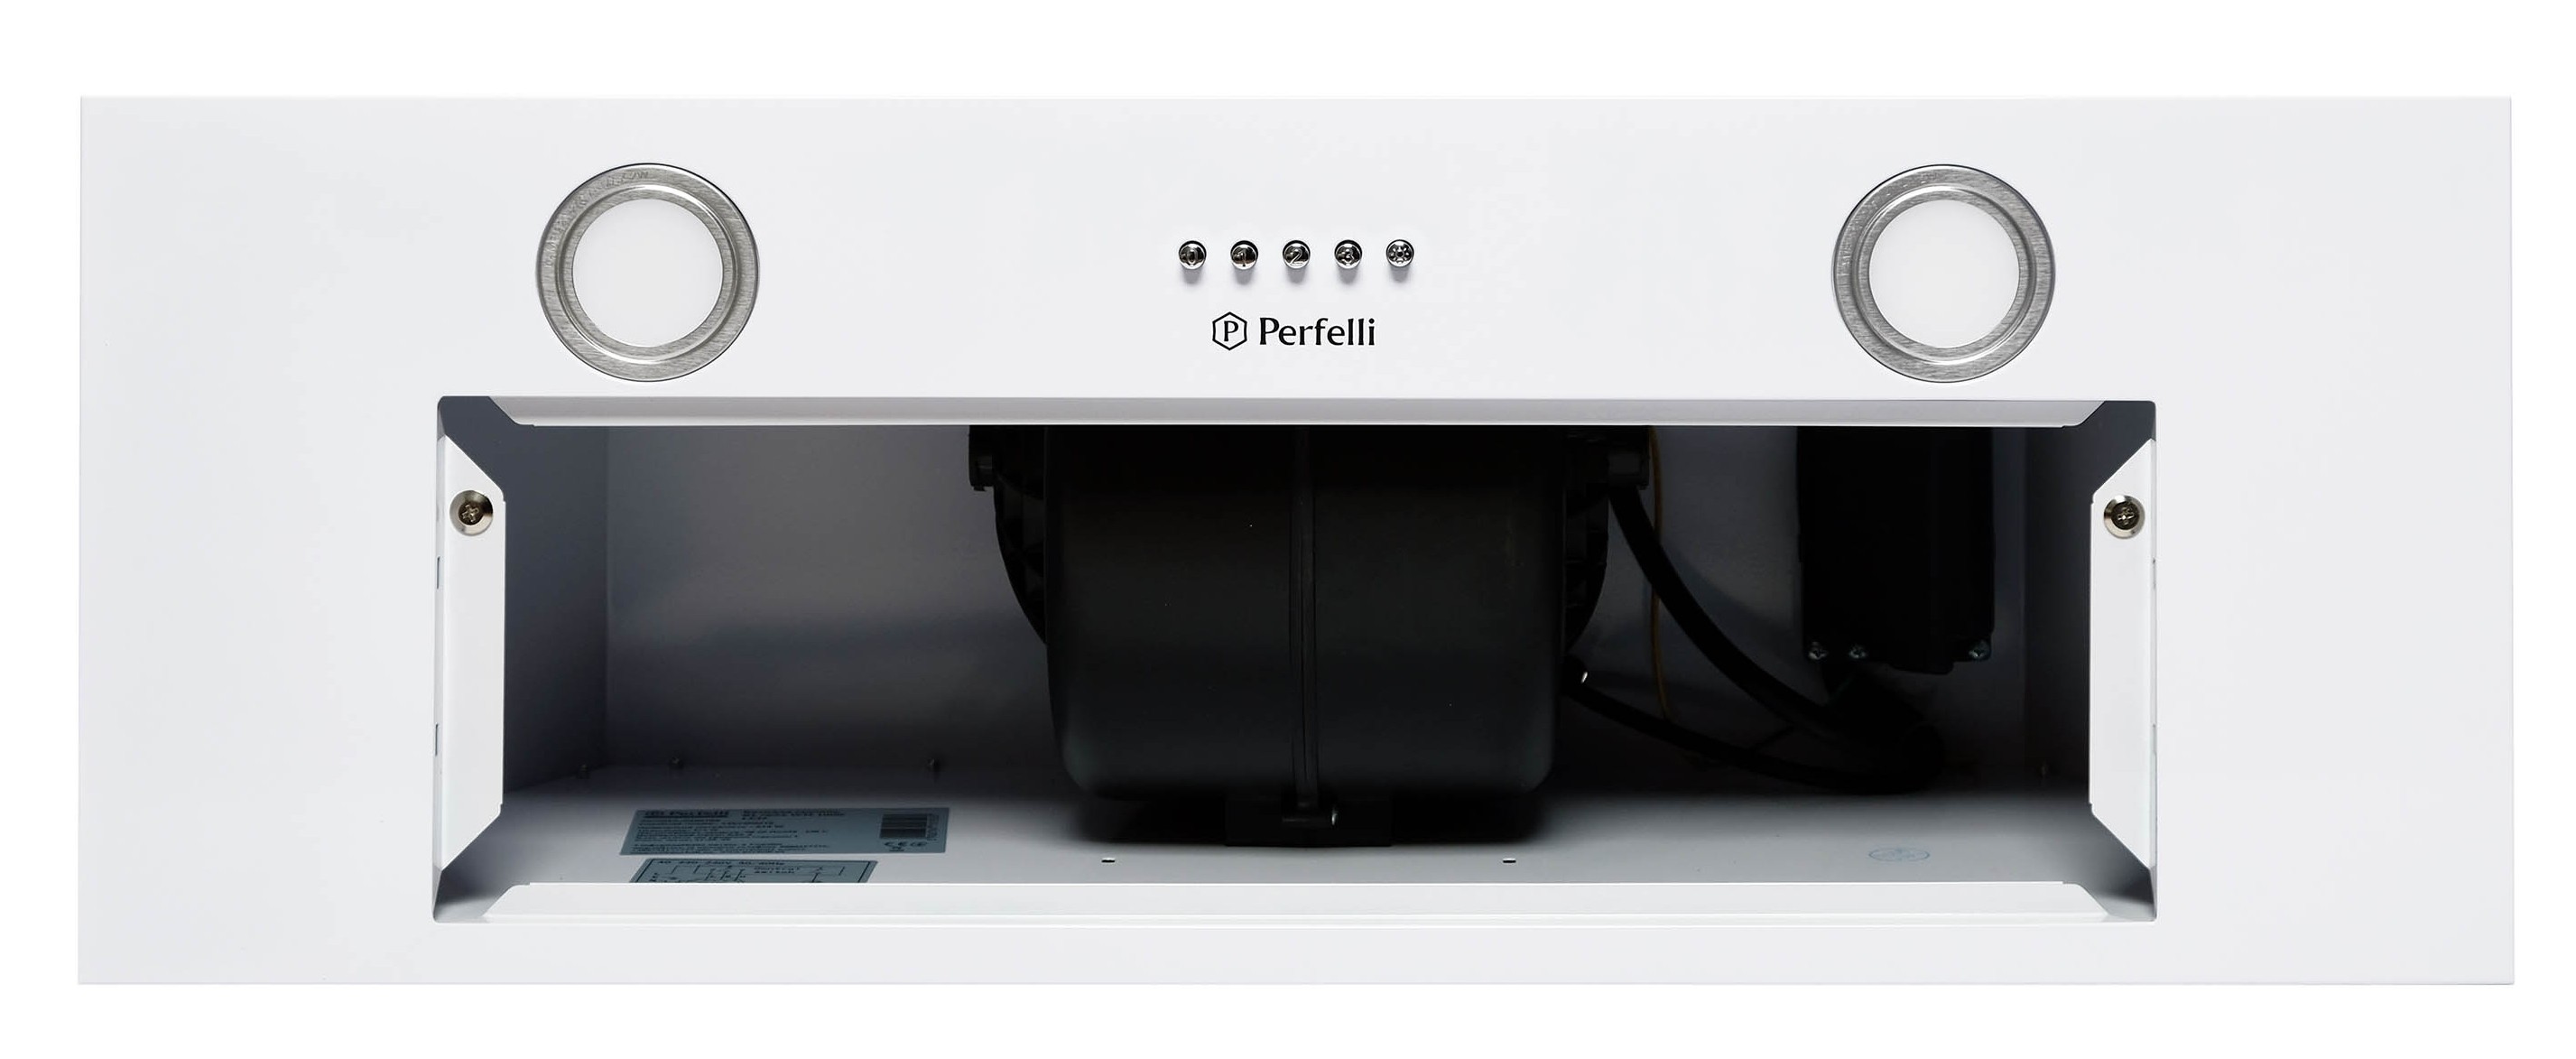 Кухонная вытяжка Perfelli BI 7652 WH 1000 LED характеристики - фотография 7